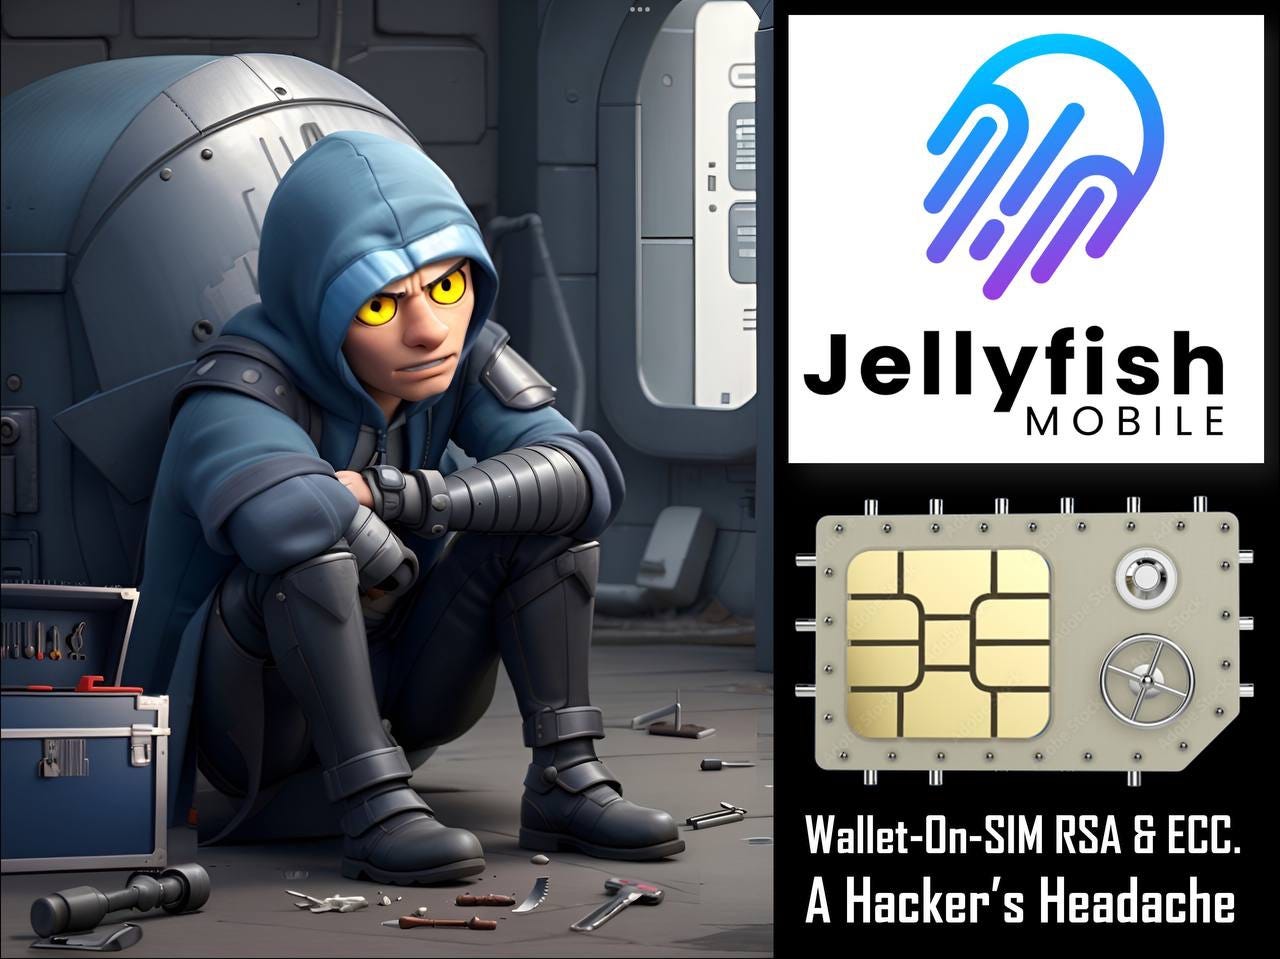 Hackers’ Headache: Jellyfish Mobile Wallet-On-SIM RSA & ECC Security